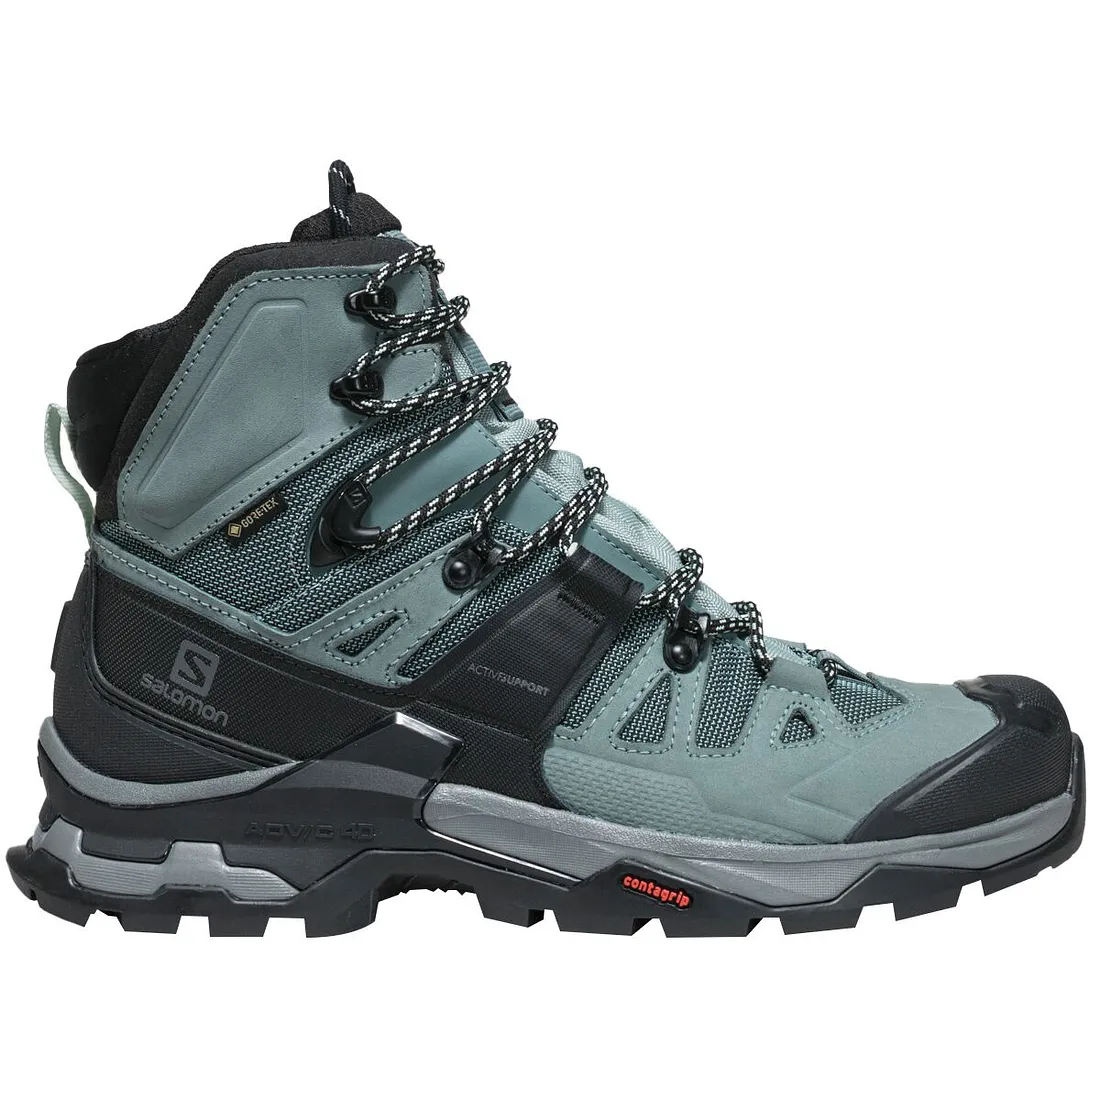 Salomon Quest 4 GTX Women's Hiking Boots